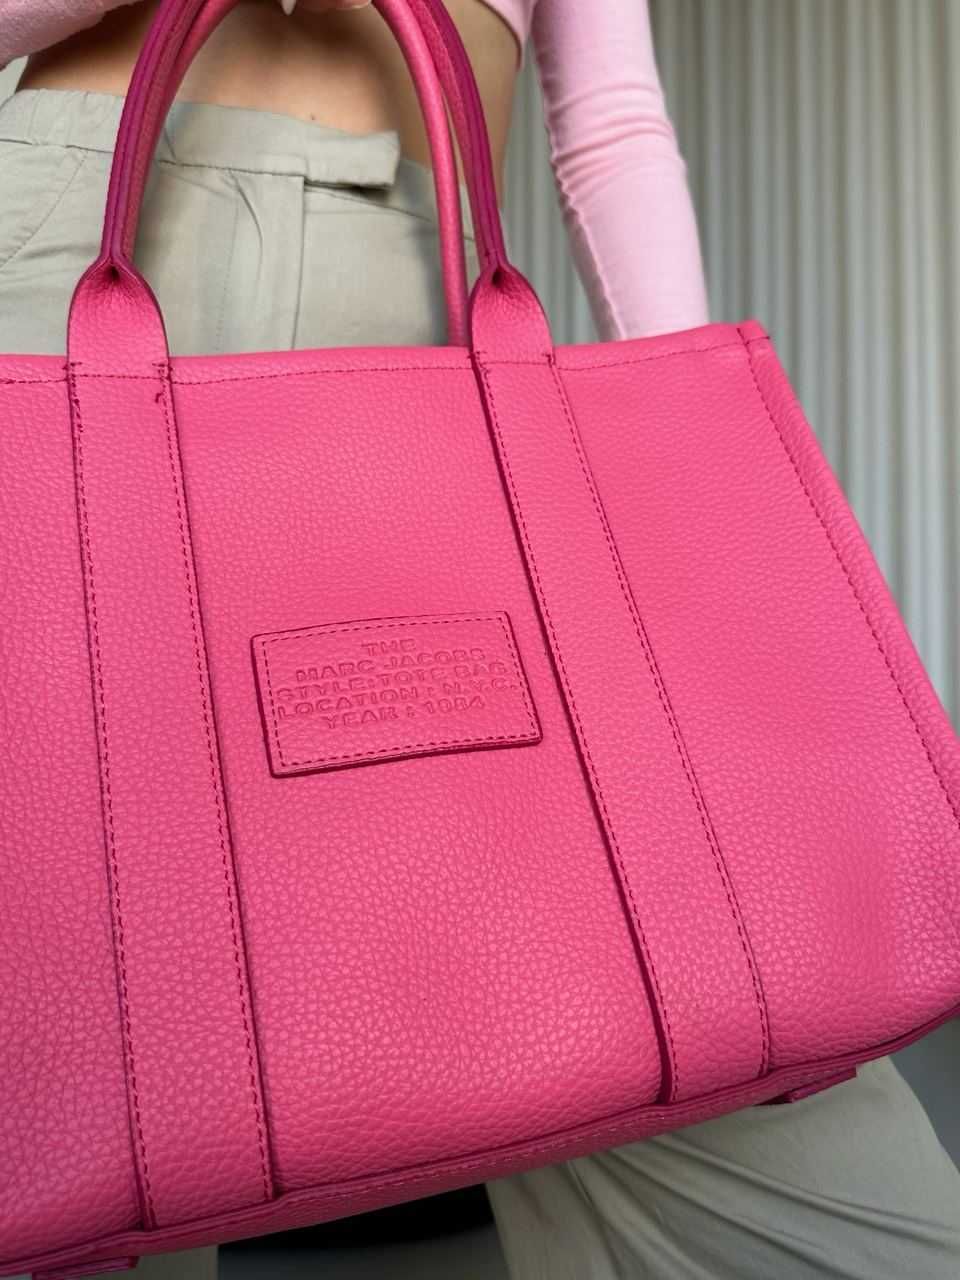 Damska srednia shoperka MJ Tote Bag Pink torba koloru fucsja